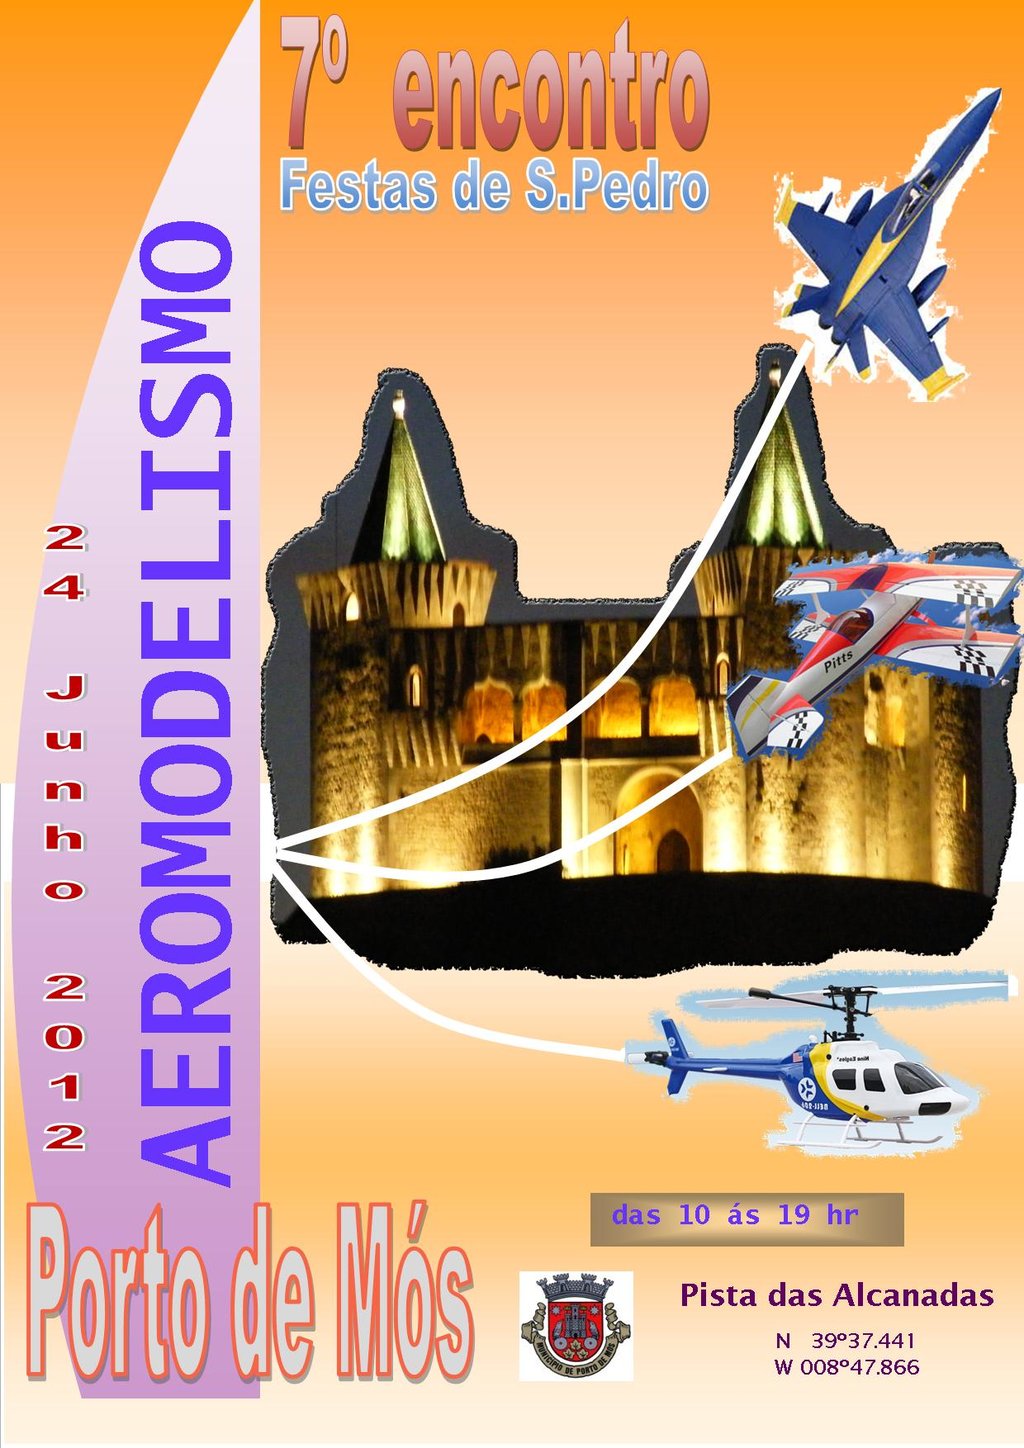 7º Encontro de Aeromodelismo